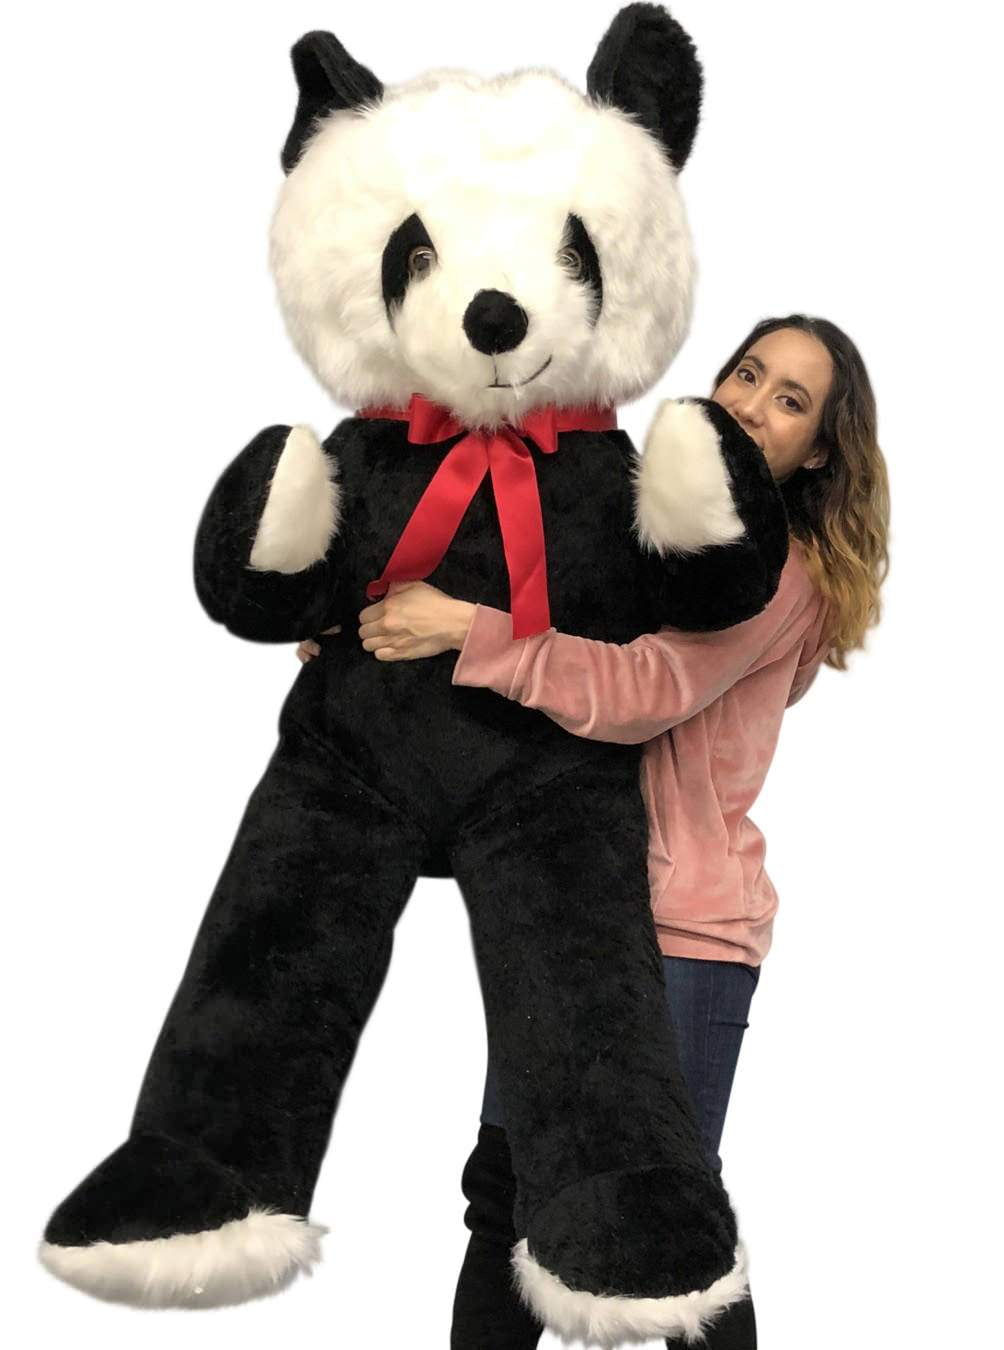 panda teddy bear 6 feet